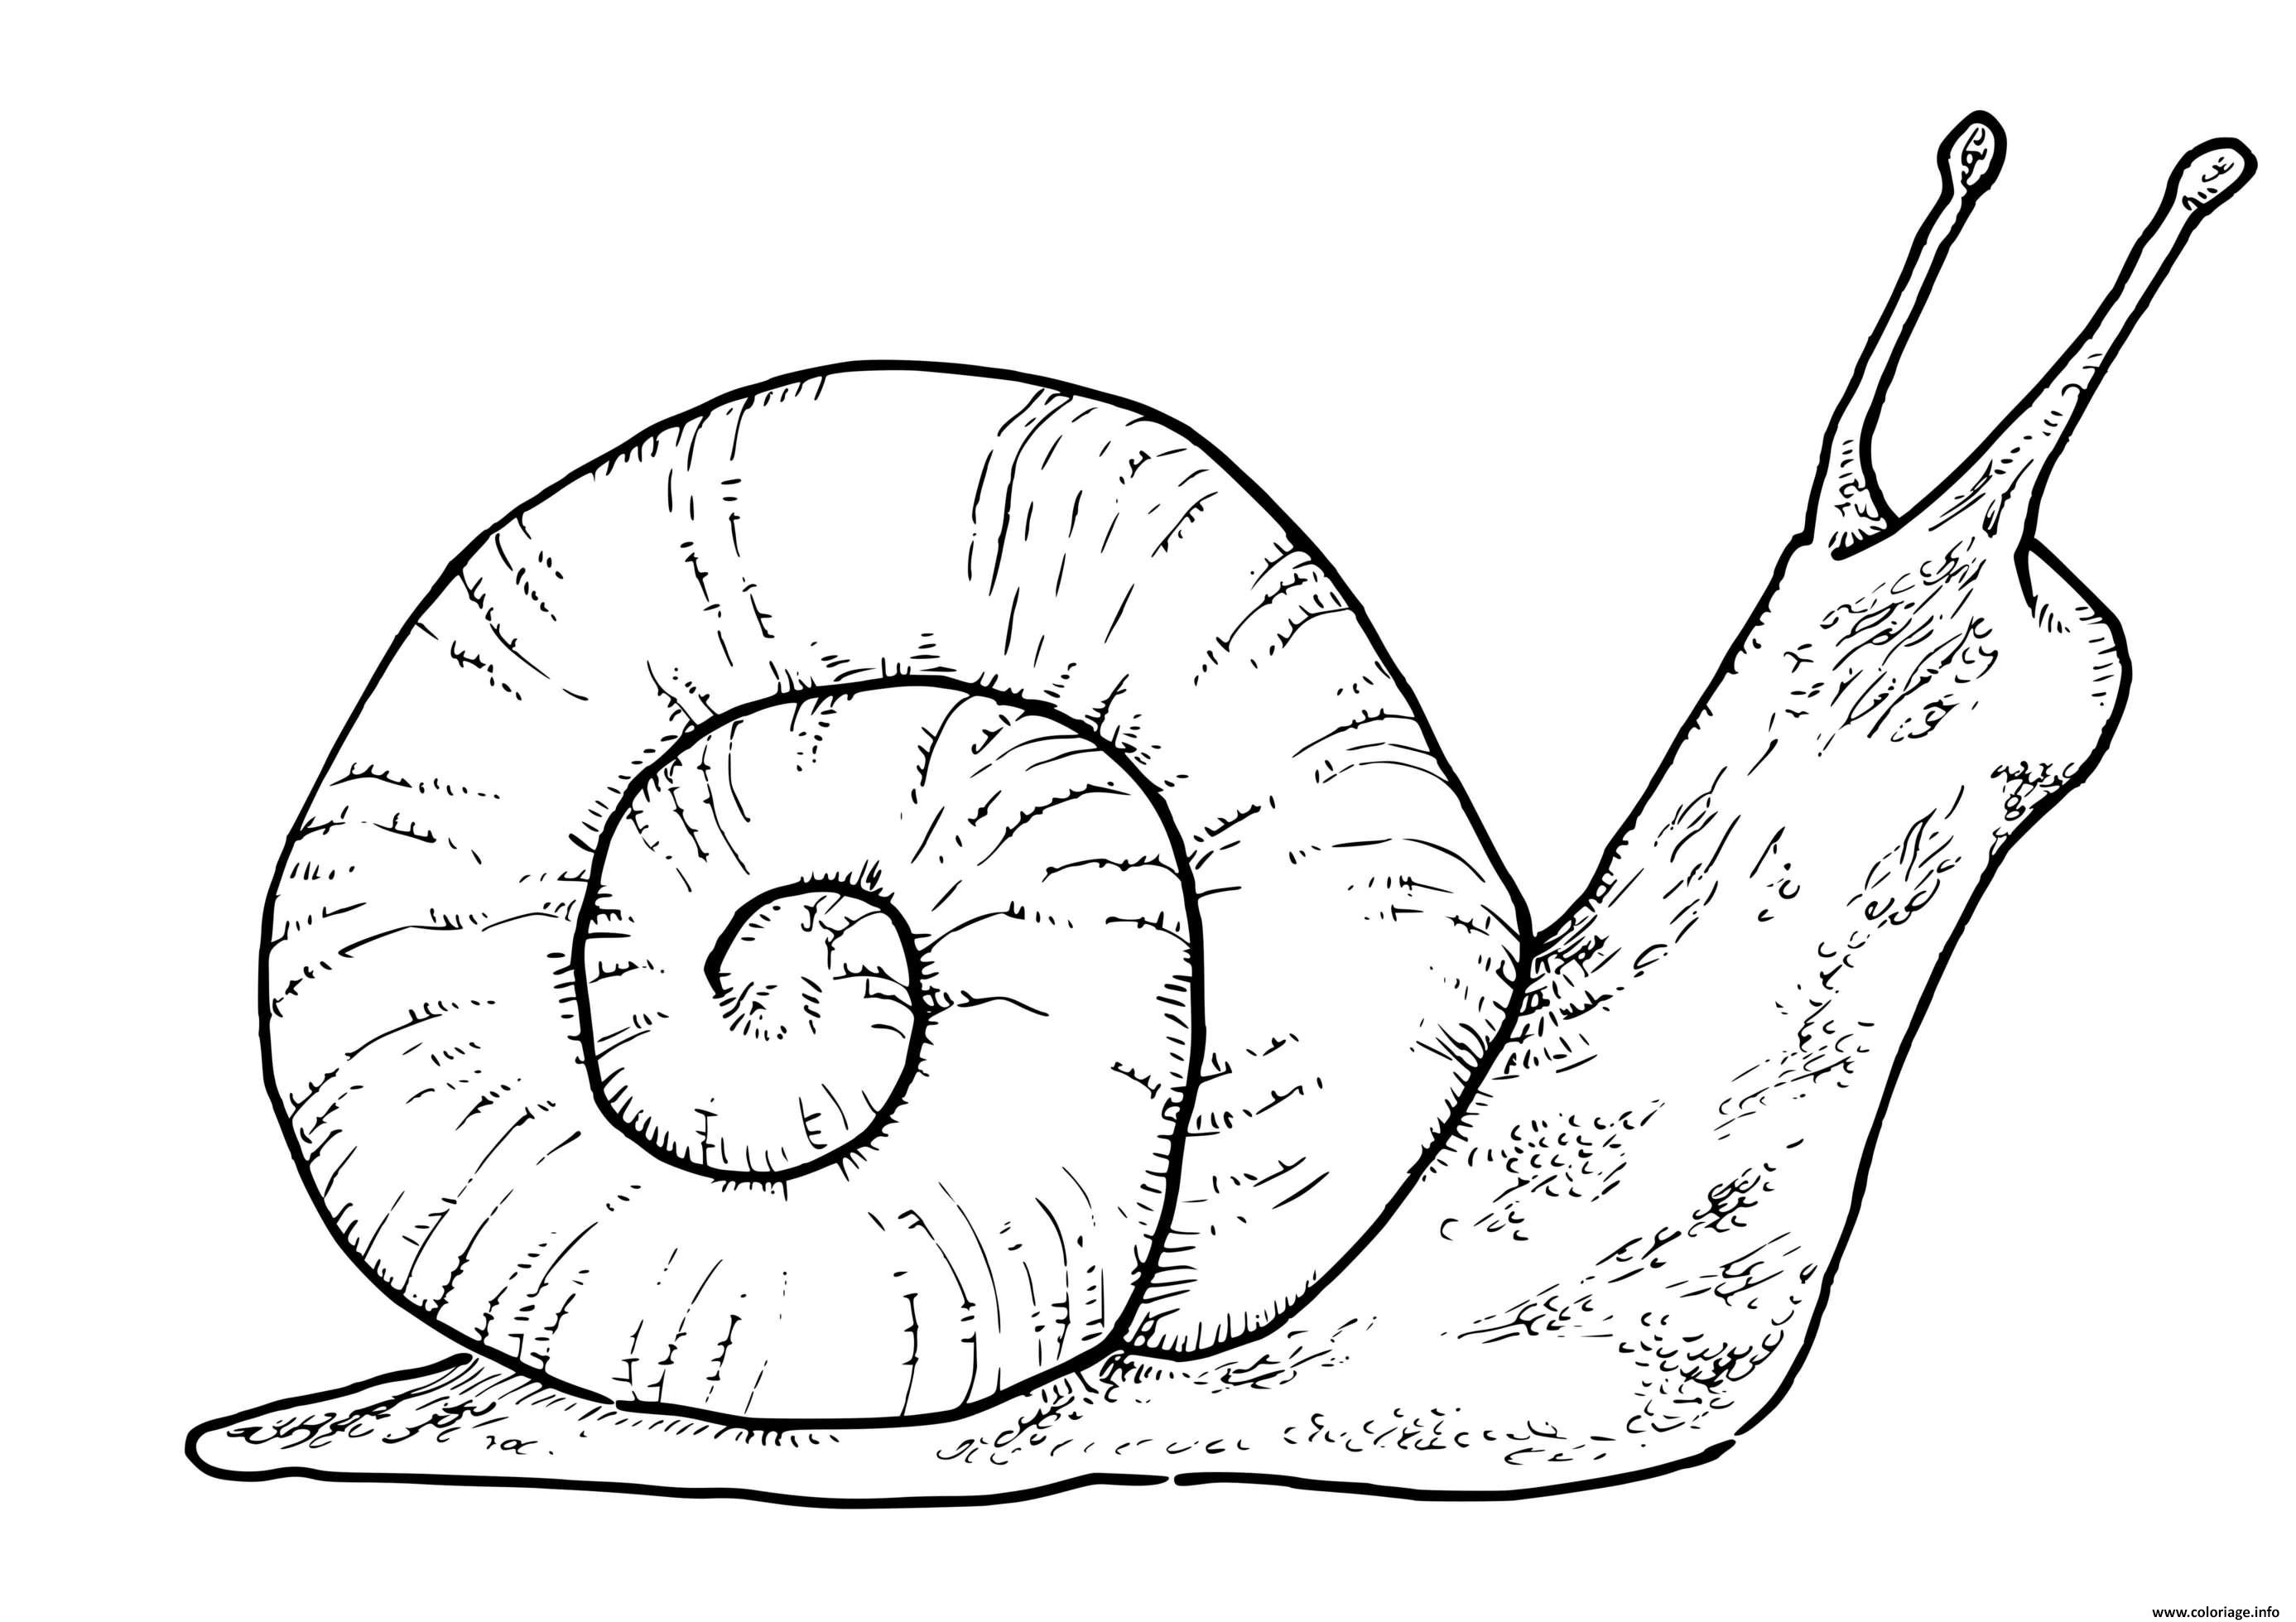 Dessin escargot monachoides vicinus espece terrestre qui respire l air Coloriage Gratuit à Imprimer